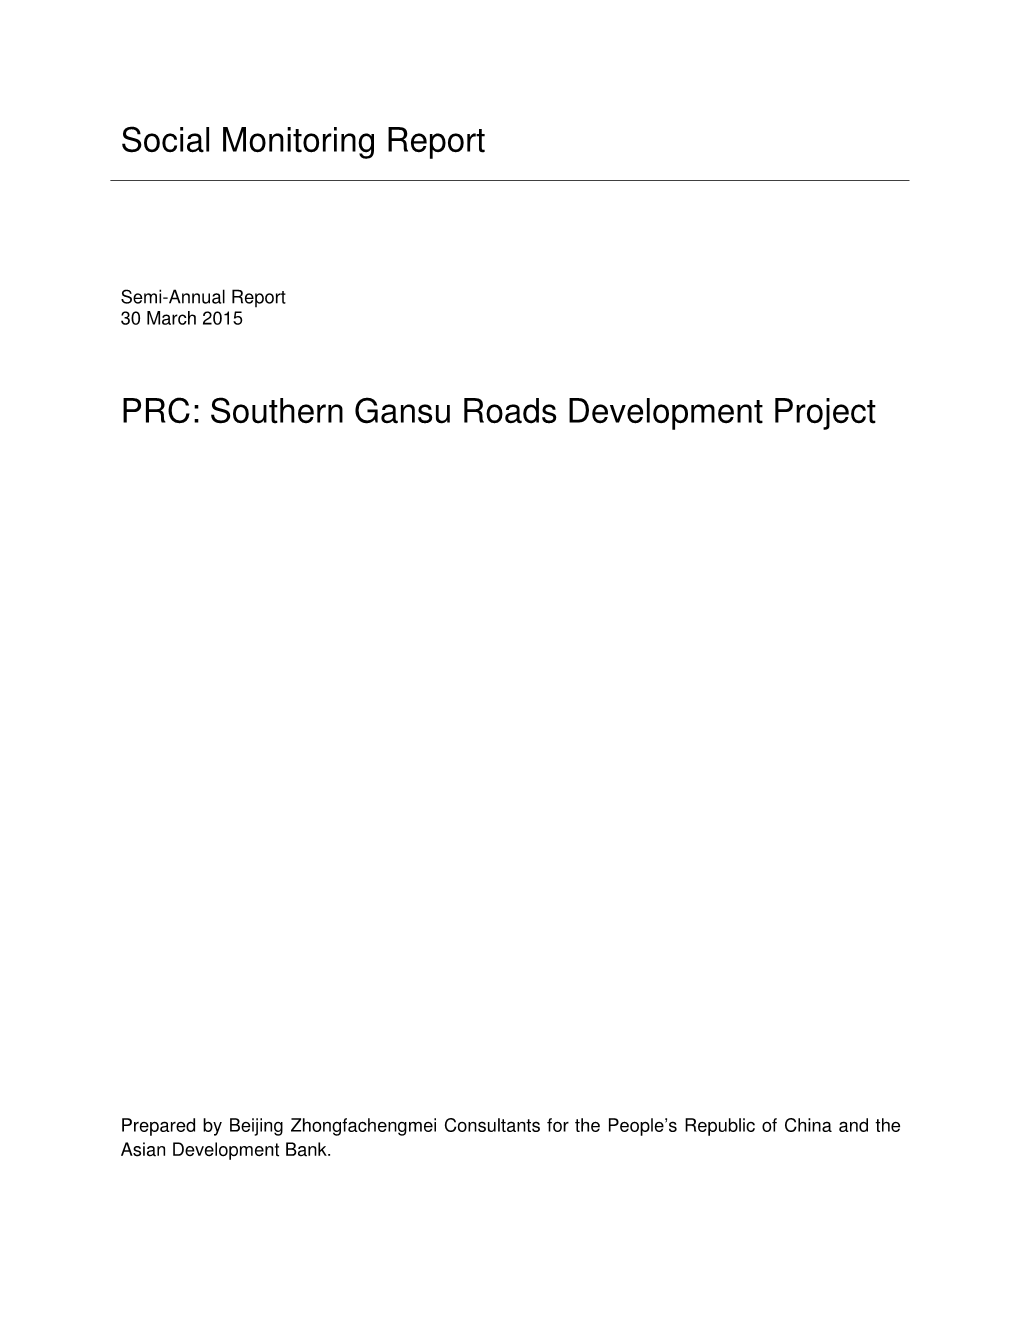 Southern Gansu Roads Development Project